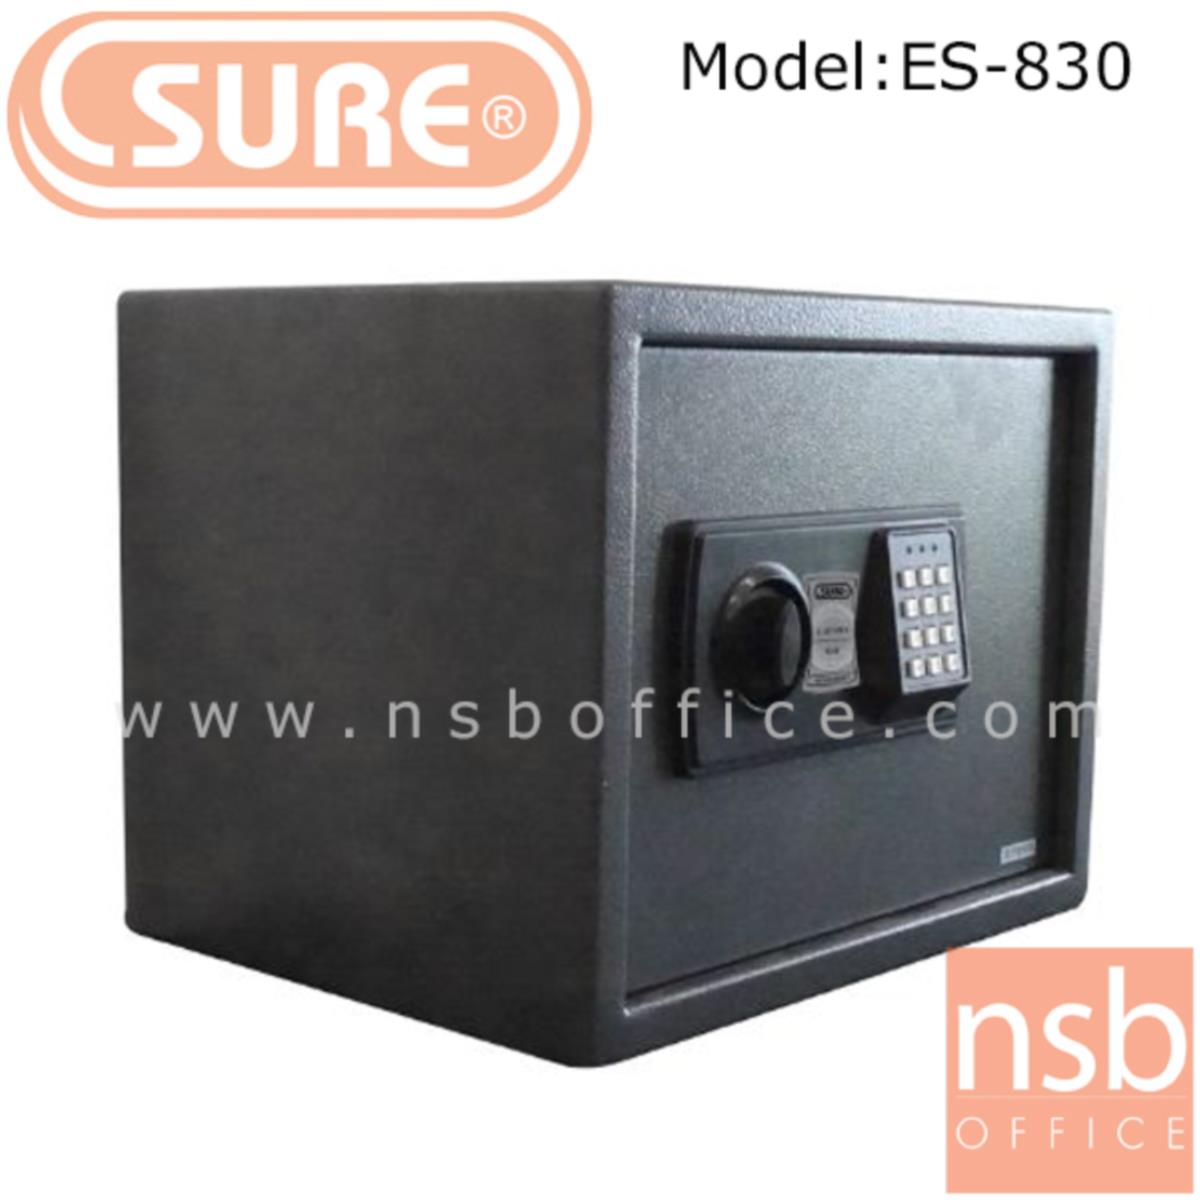 F03A016:ตู้เซฟดิจตอล SR-ES830 น้ำหนัก 11 กก. (1 รหัสกด / ปุ่มหมุนบิด)   